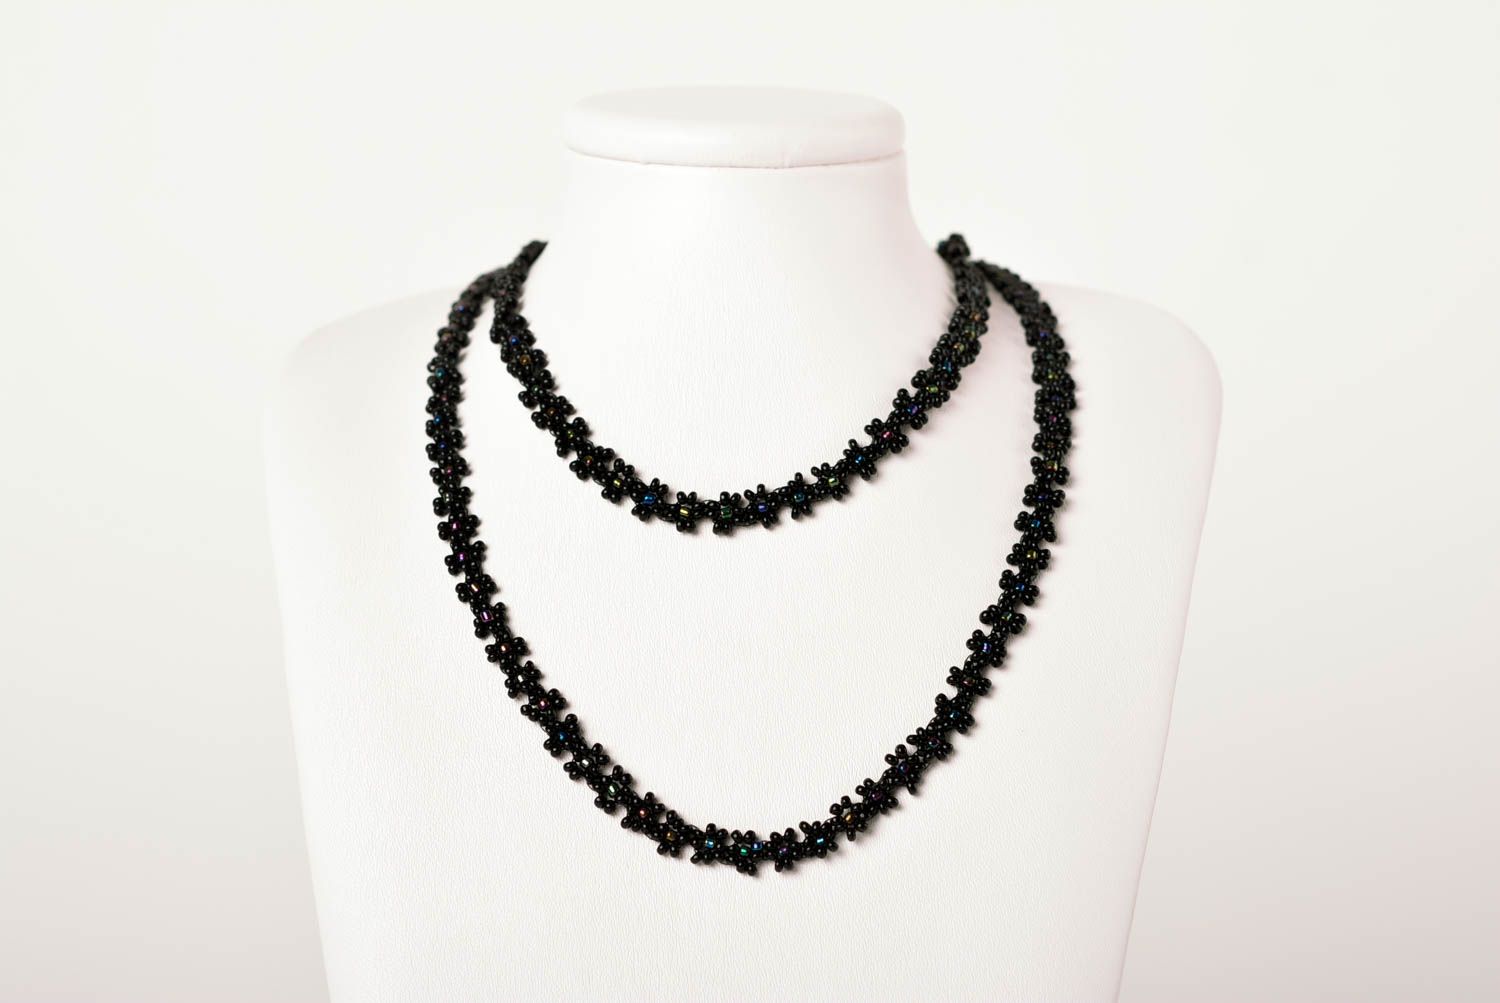 Stylish handmade beaded necklace fashion accessories artisan jewelry designs photo 2